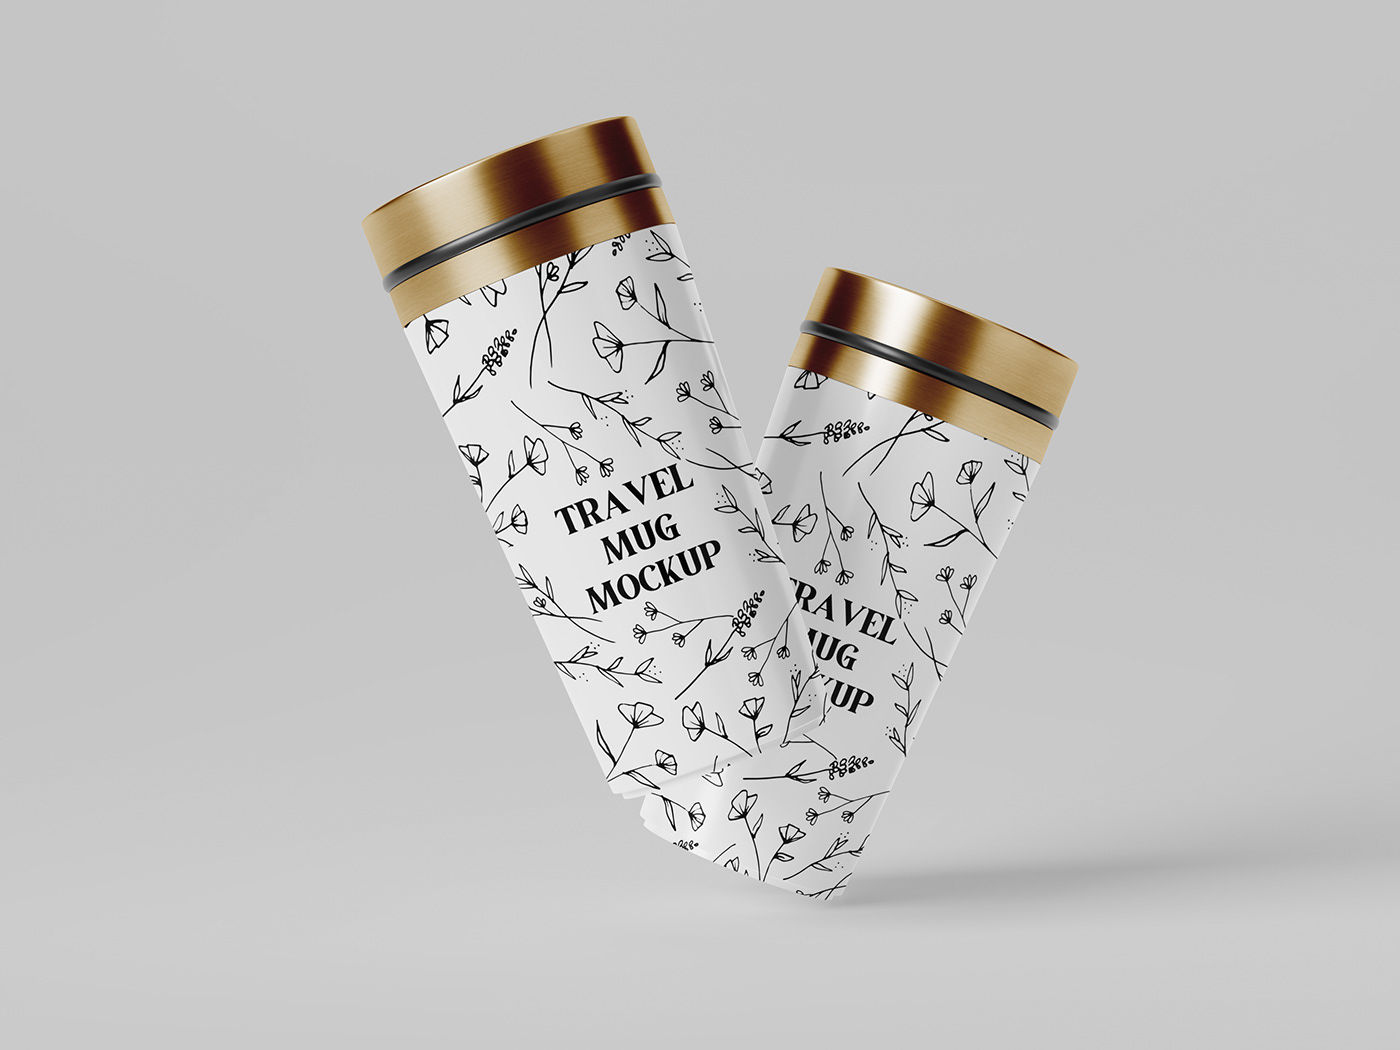 Mockup travel mug Mug  Graphic Designer aluminum beverage Coffee container design drink